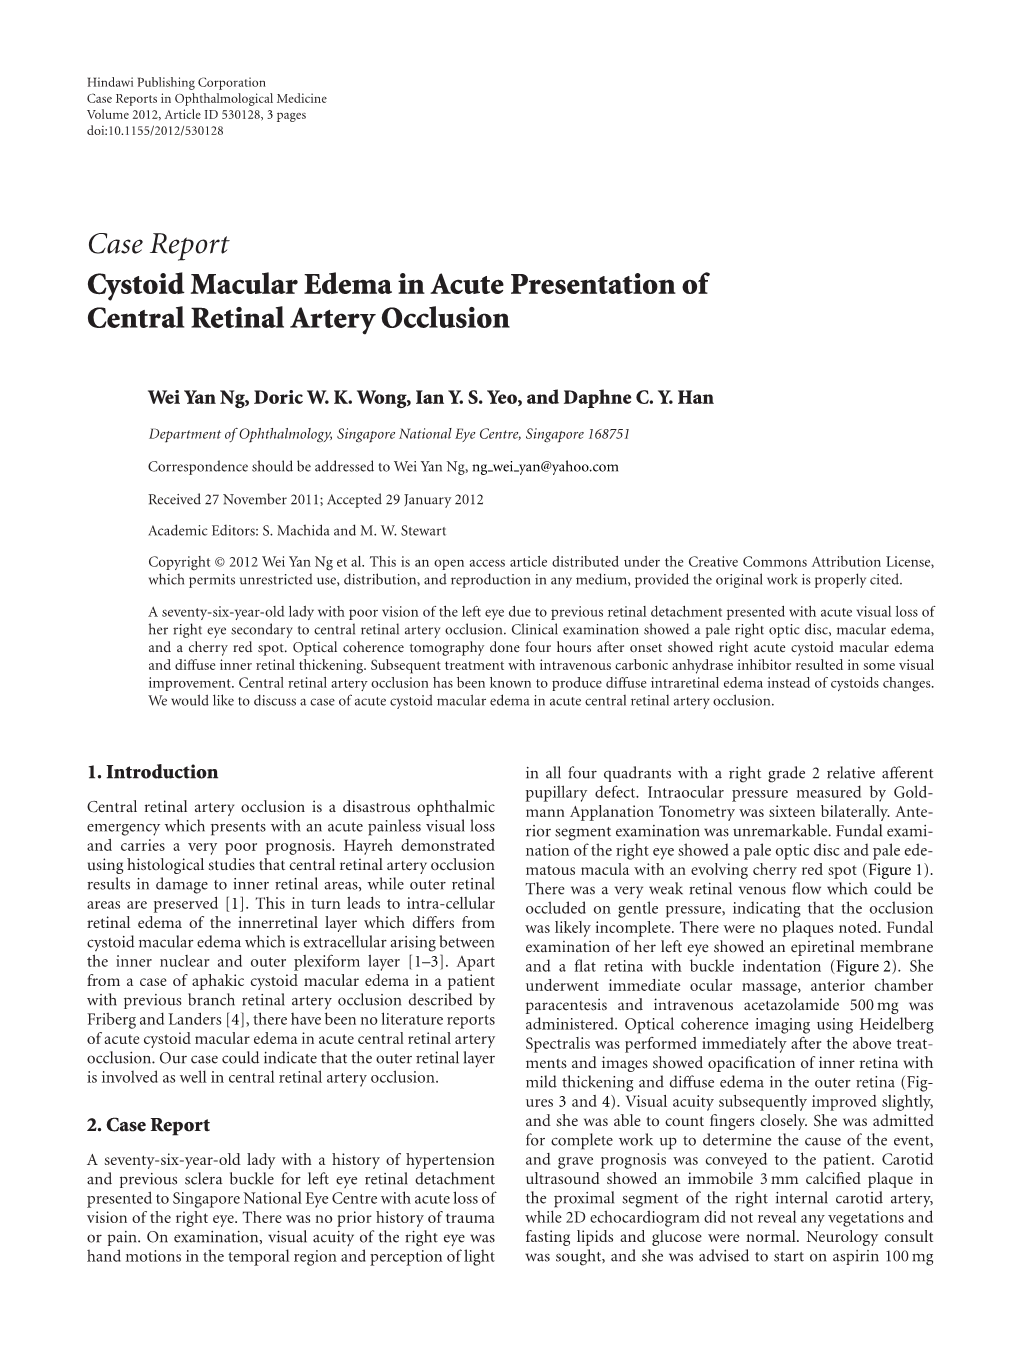 Cystoid Macular Edema in Acute Presentation of Central Retinal Artery Occlusion